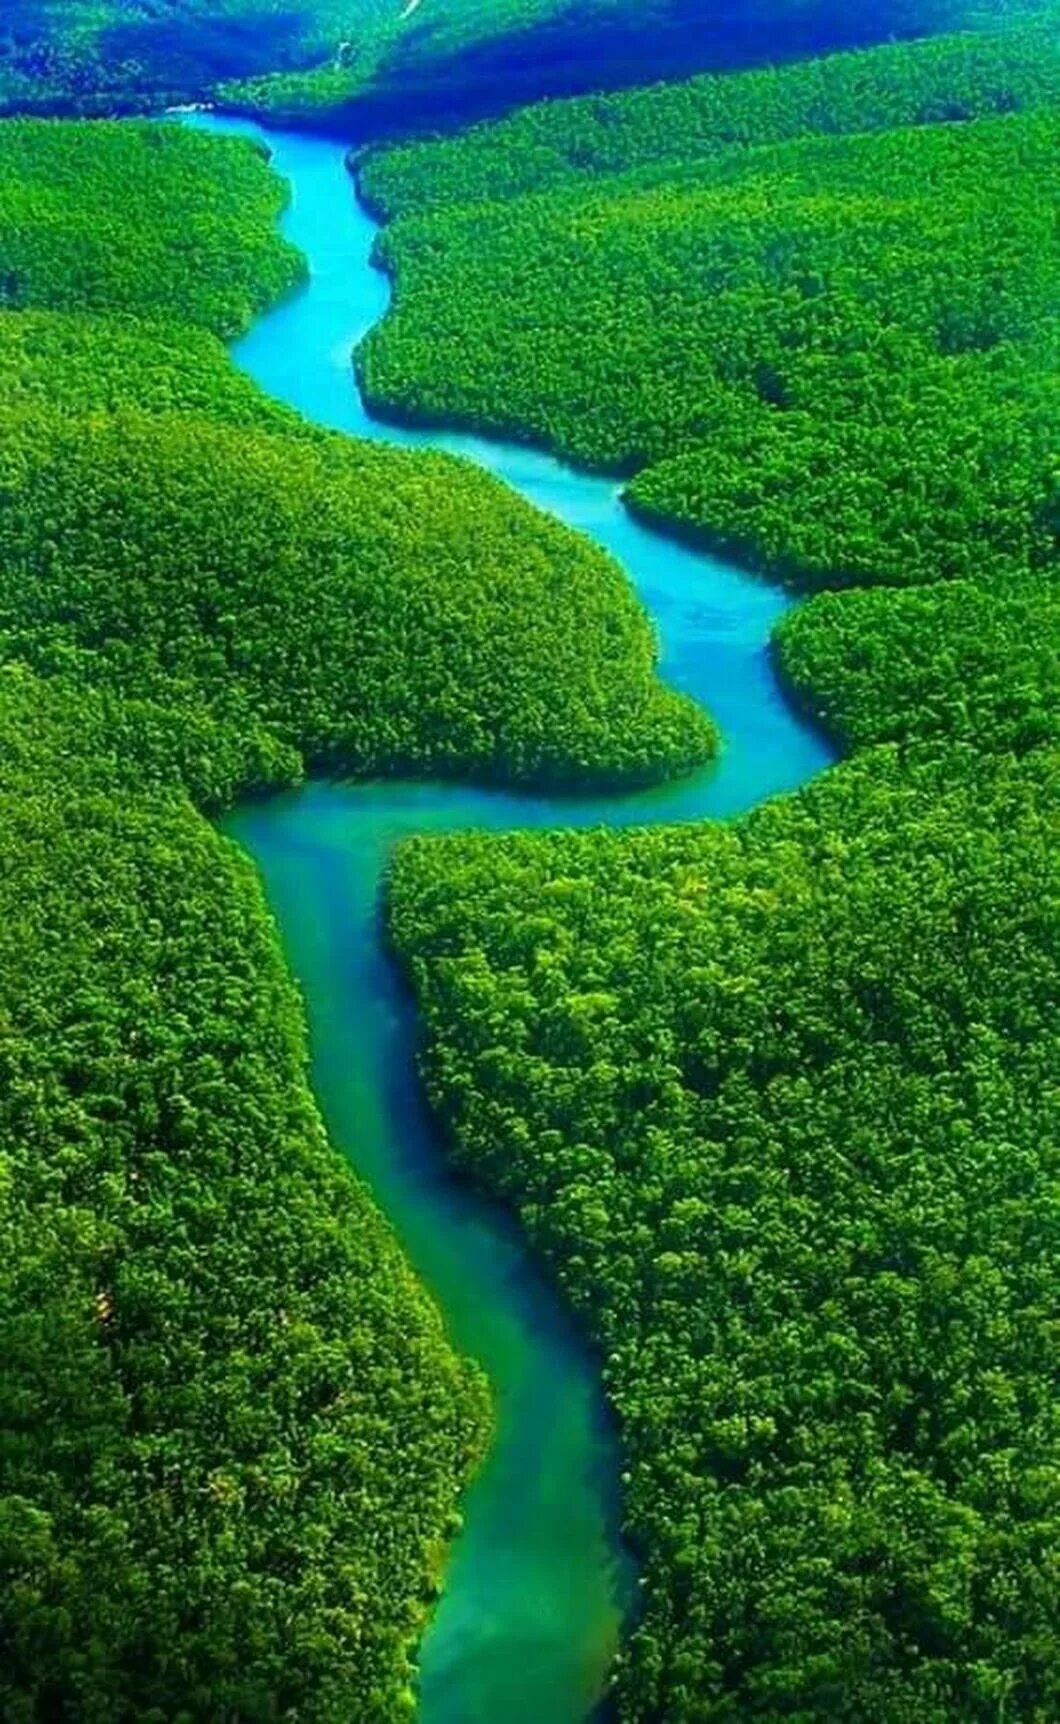 Amazon borneo congo. Бразилия тропические леса Сельва. Река Амазонка в Бразилии. Сельва Южной Америки. Южная Америка река Амазонка.